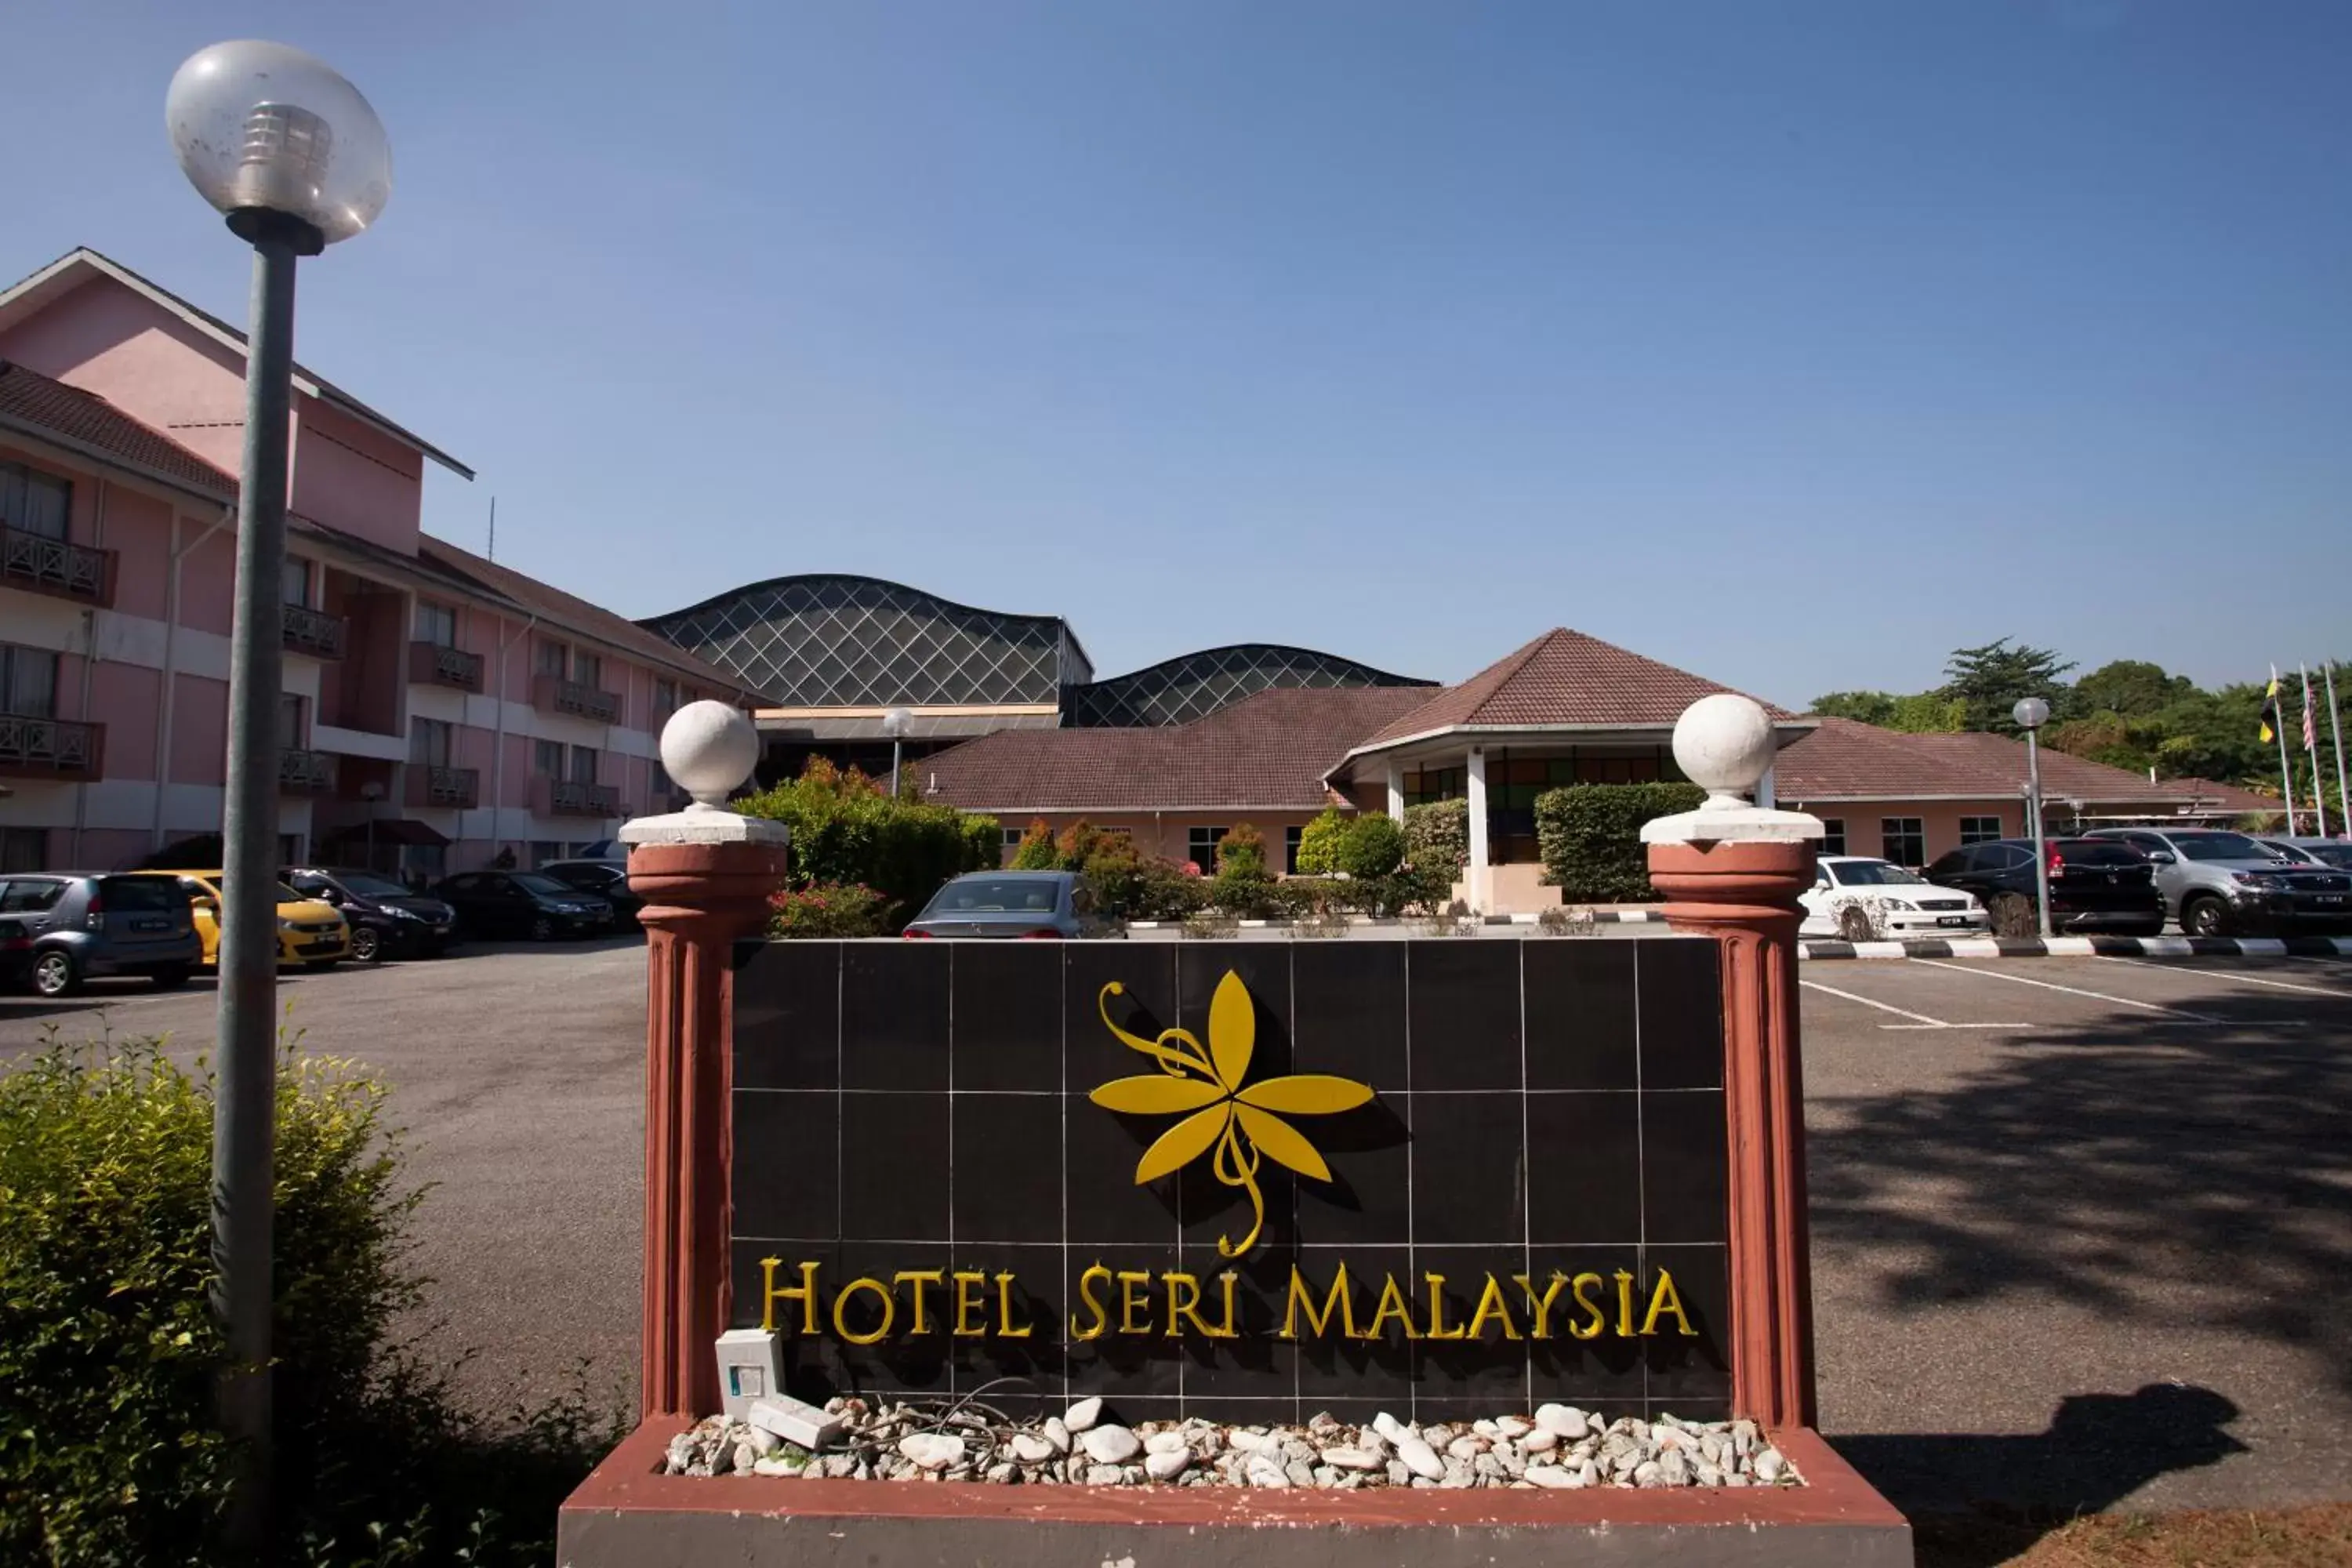 Property logo or sign in Hotel Seri Malaysia Ipoh